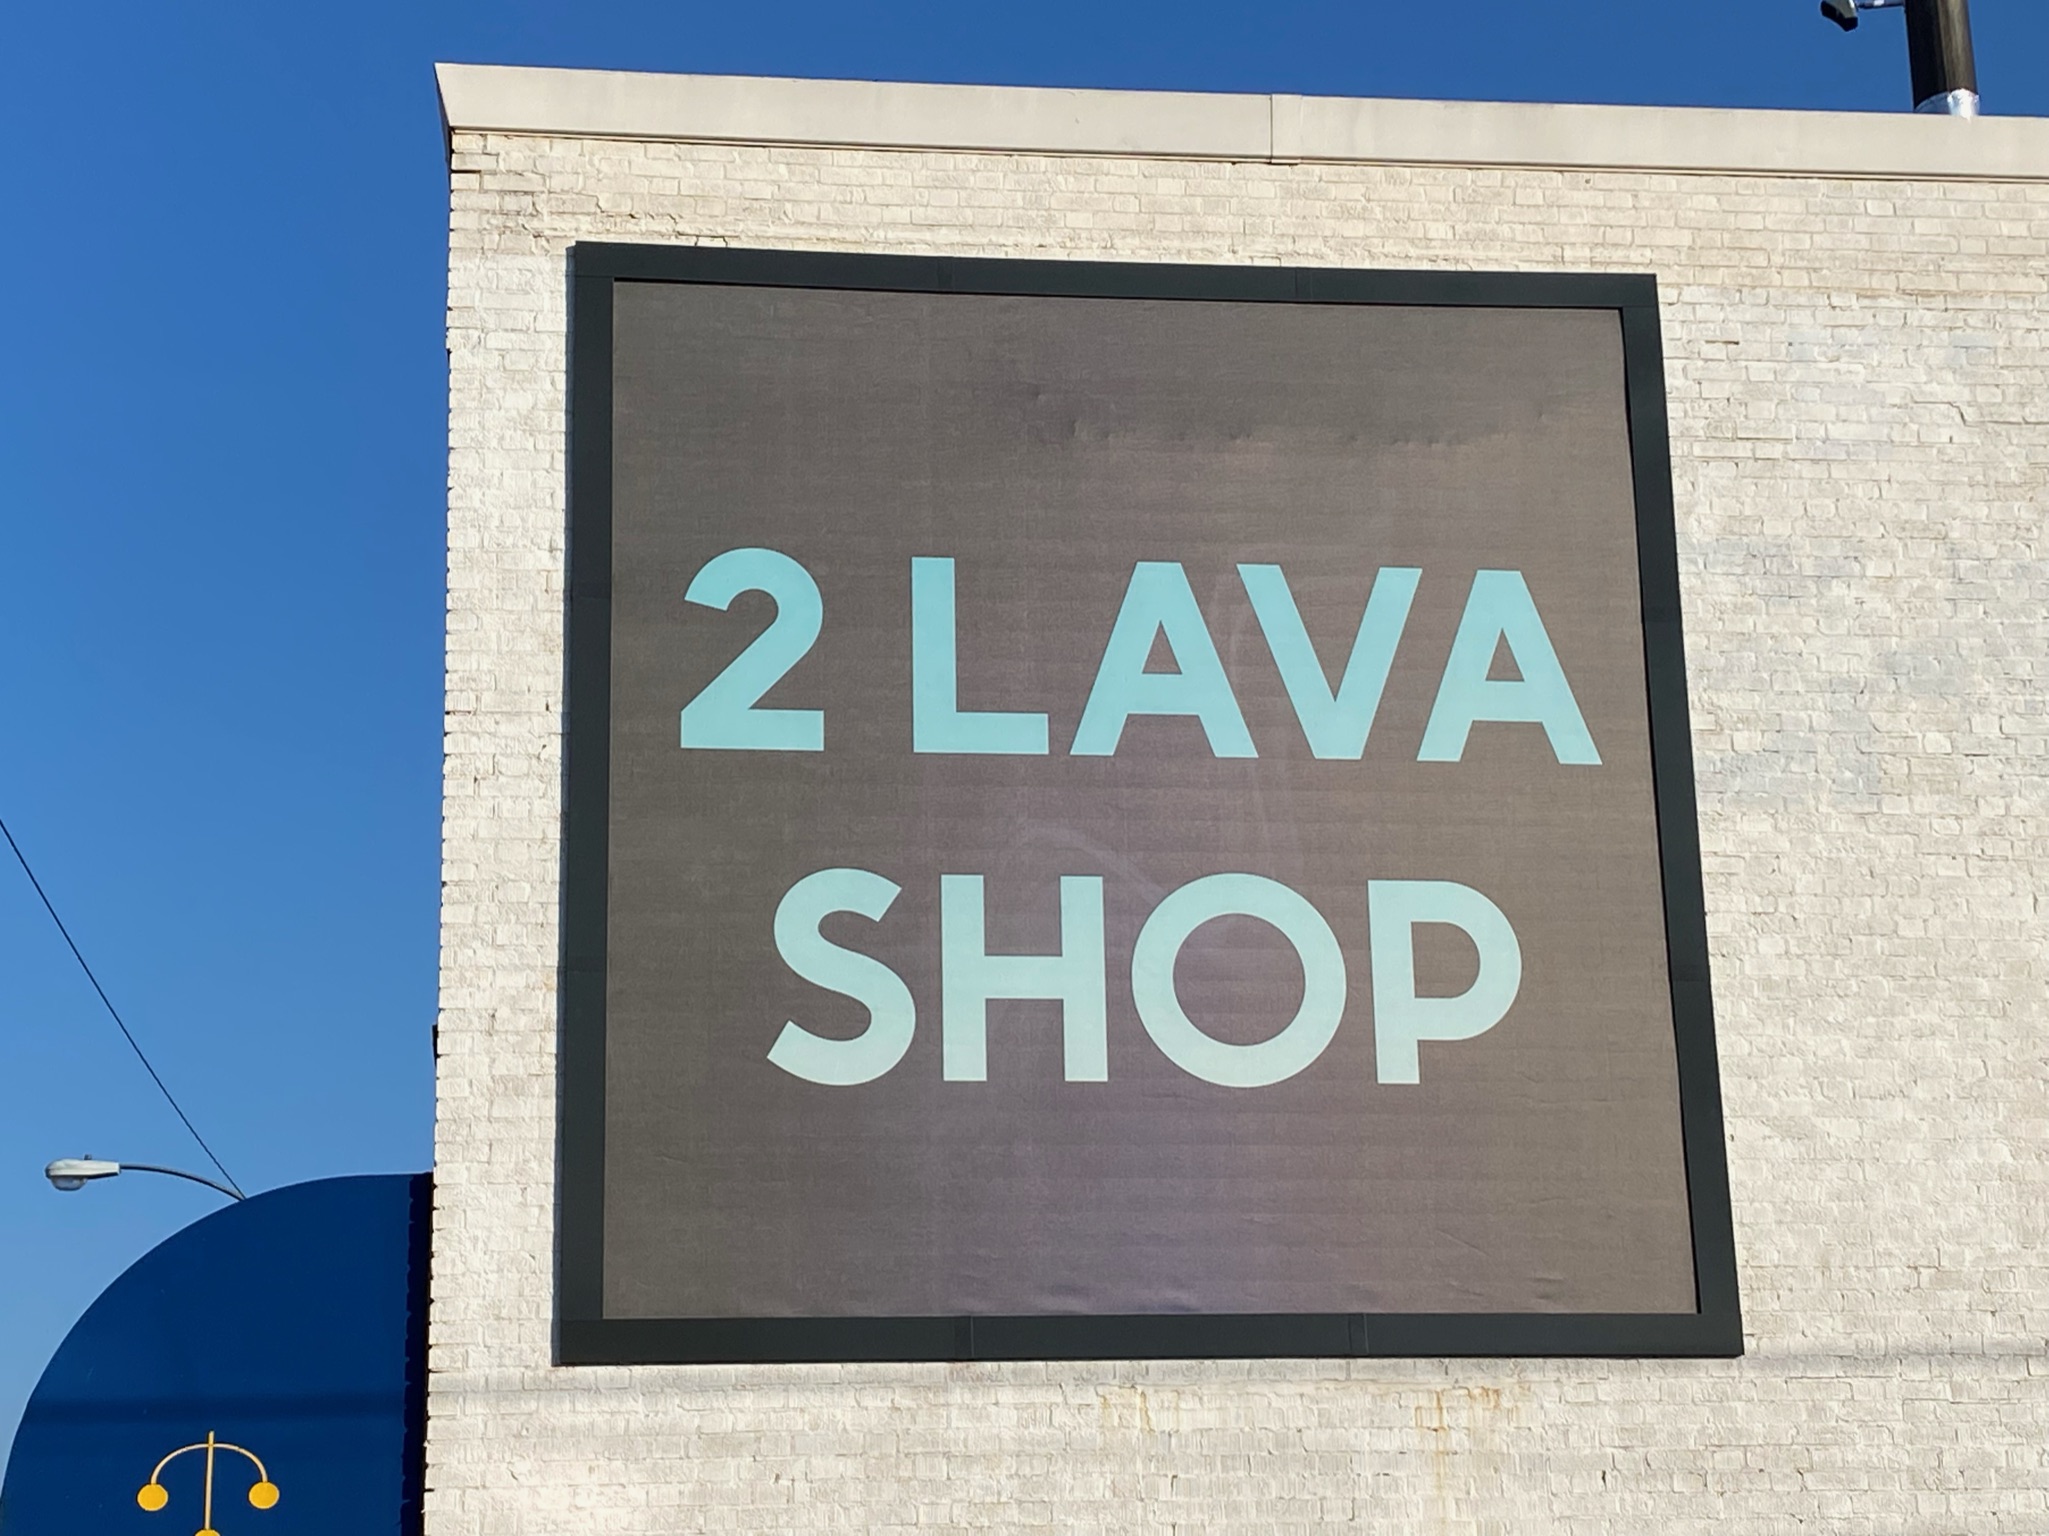 2-Lava-Shop-Banner-Lind-SignSpring-BannerFrame-For-Retail Sick of Wrinkles?